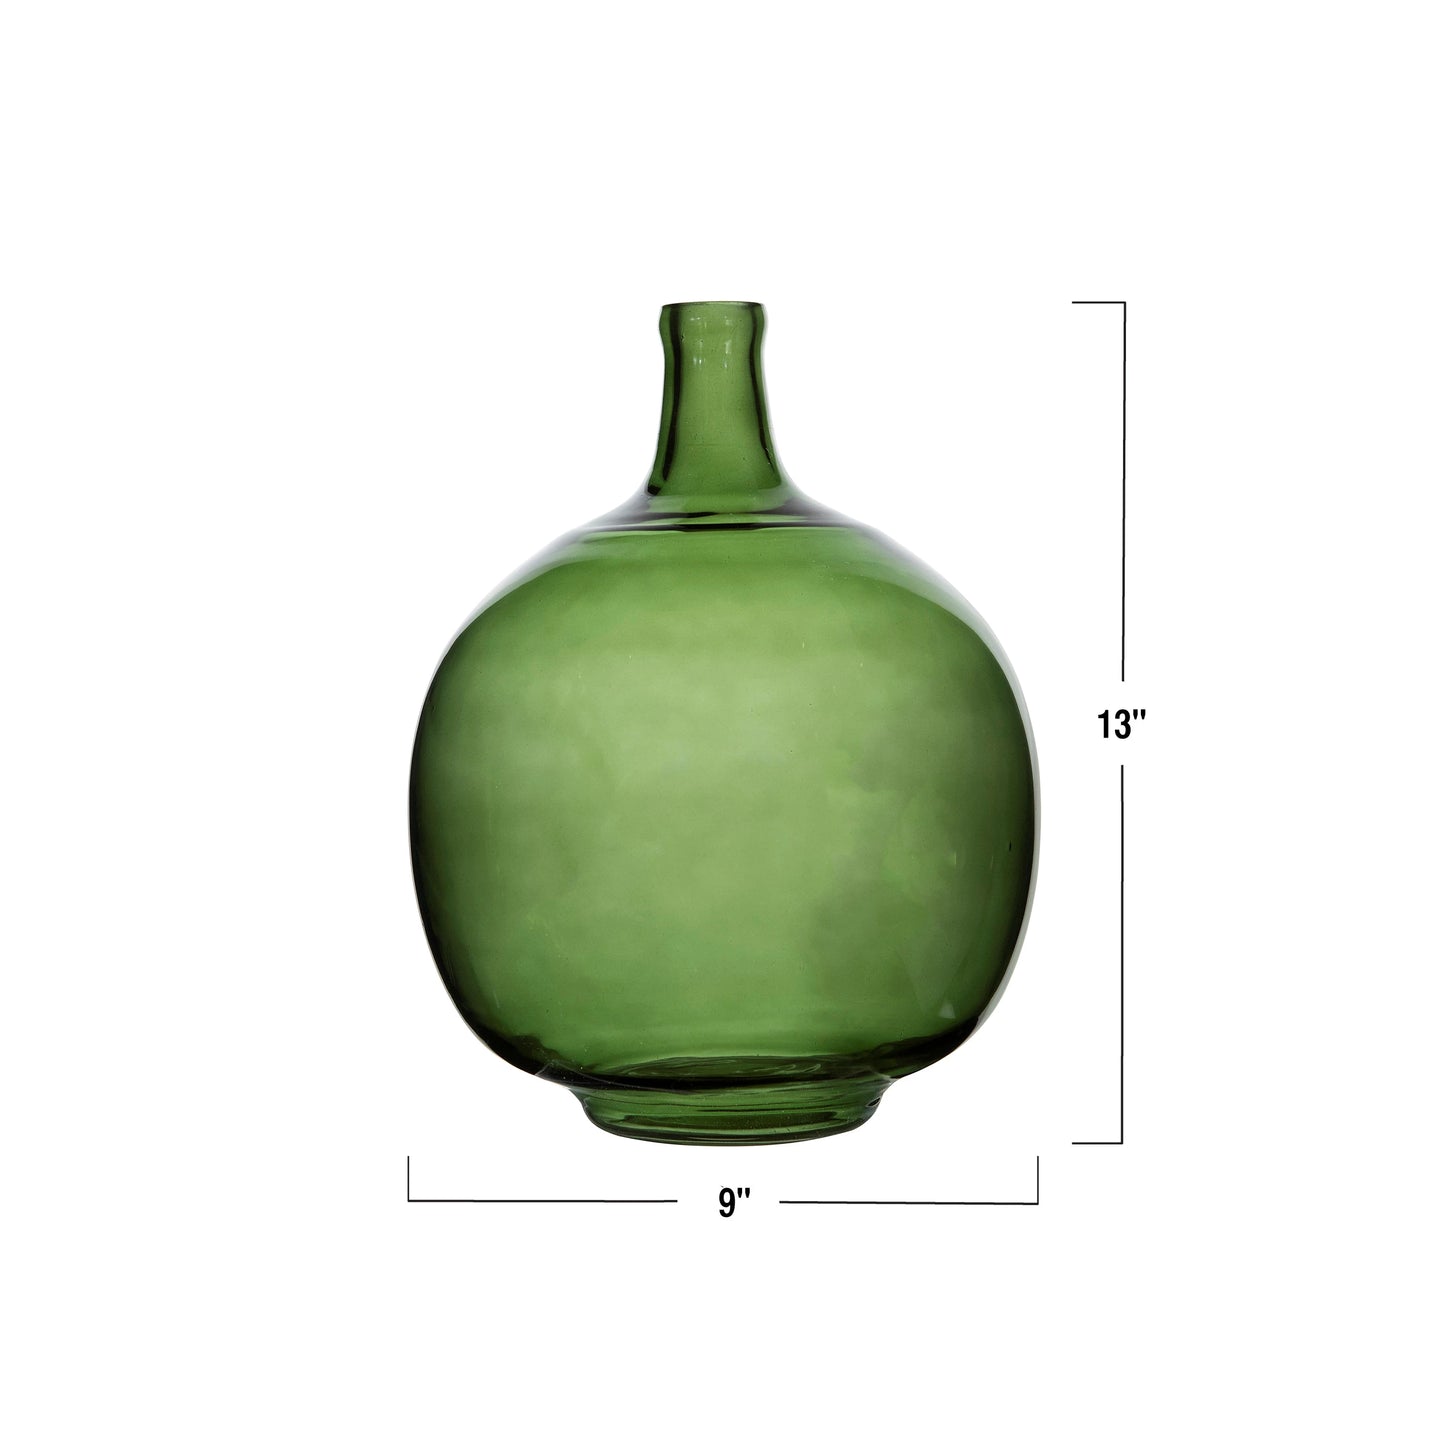 Vintage Reproduction Glass Bottle